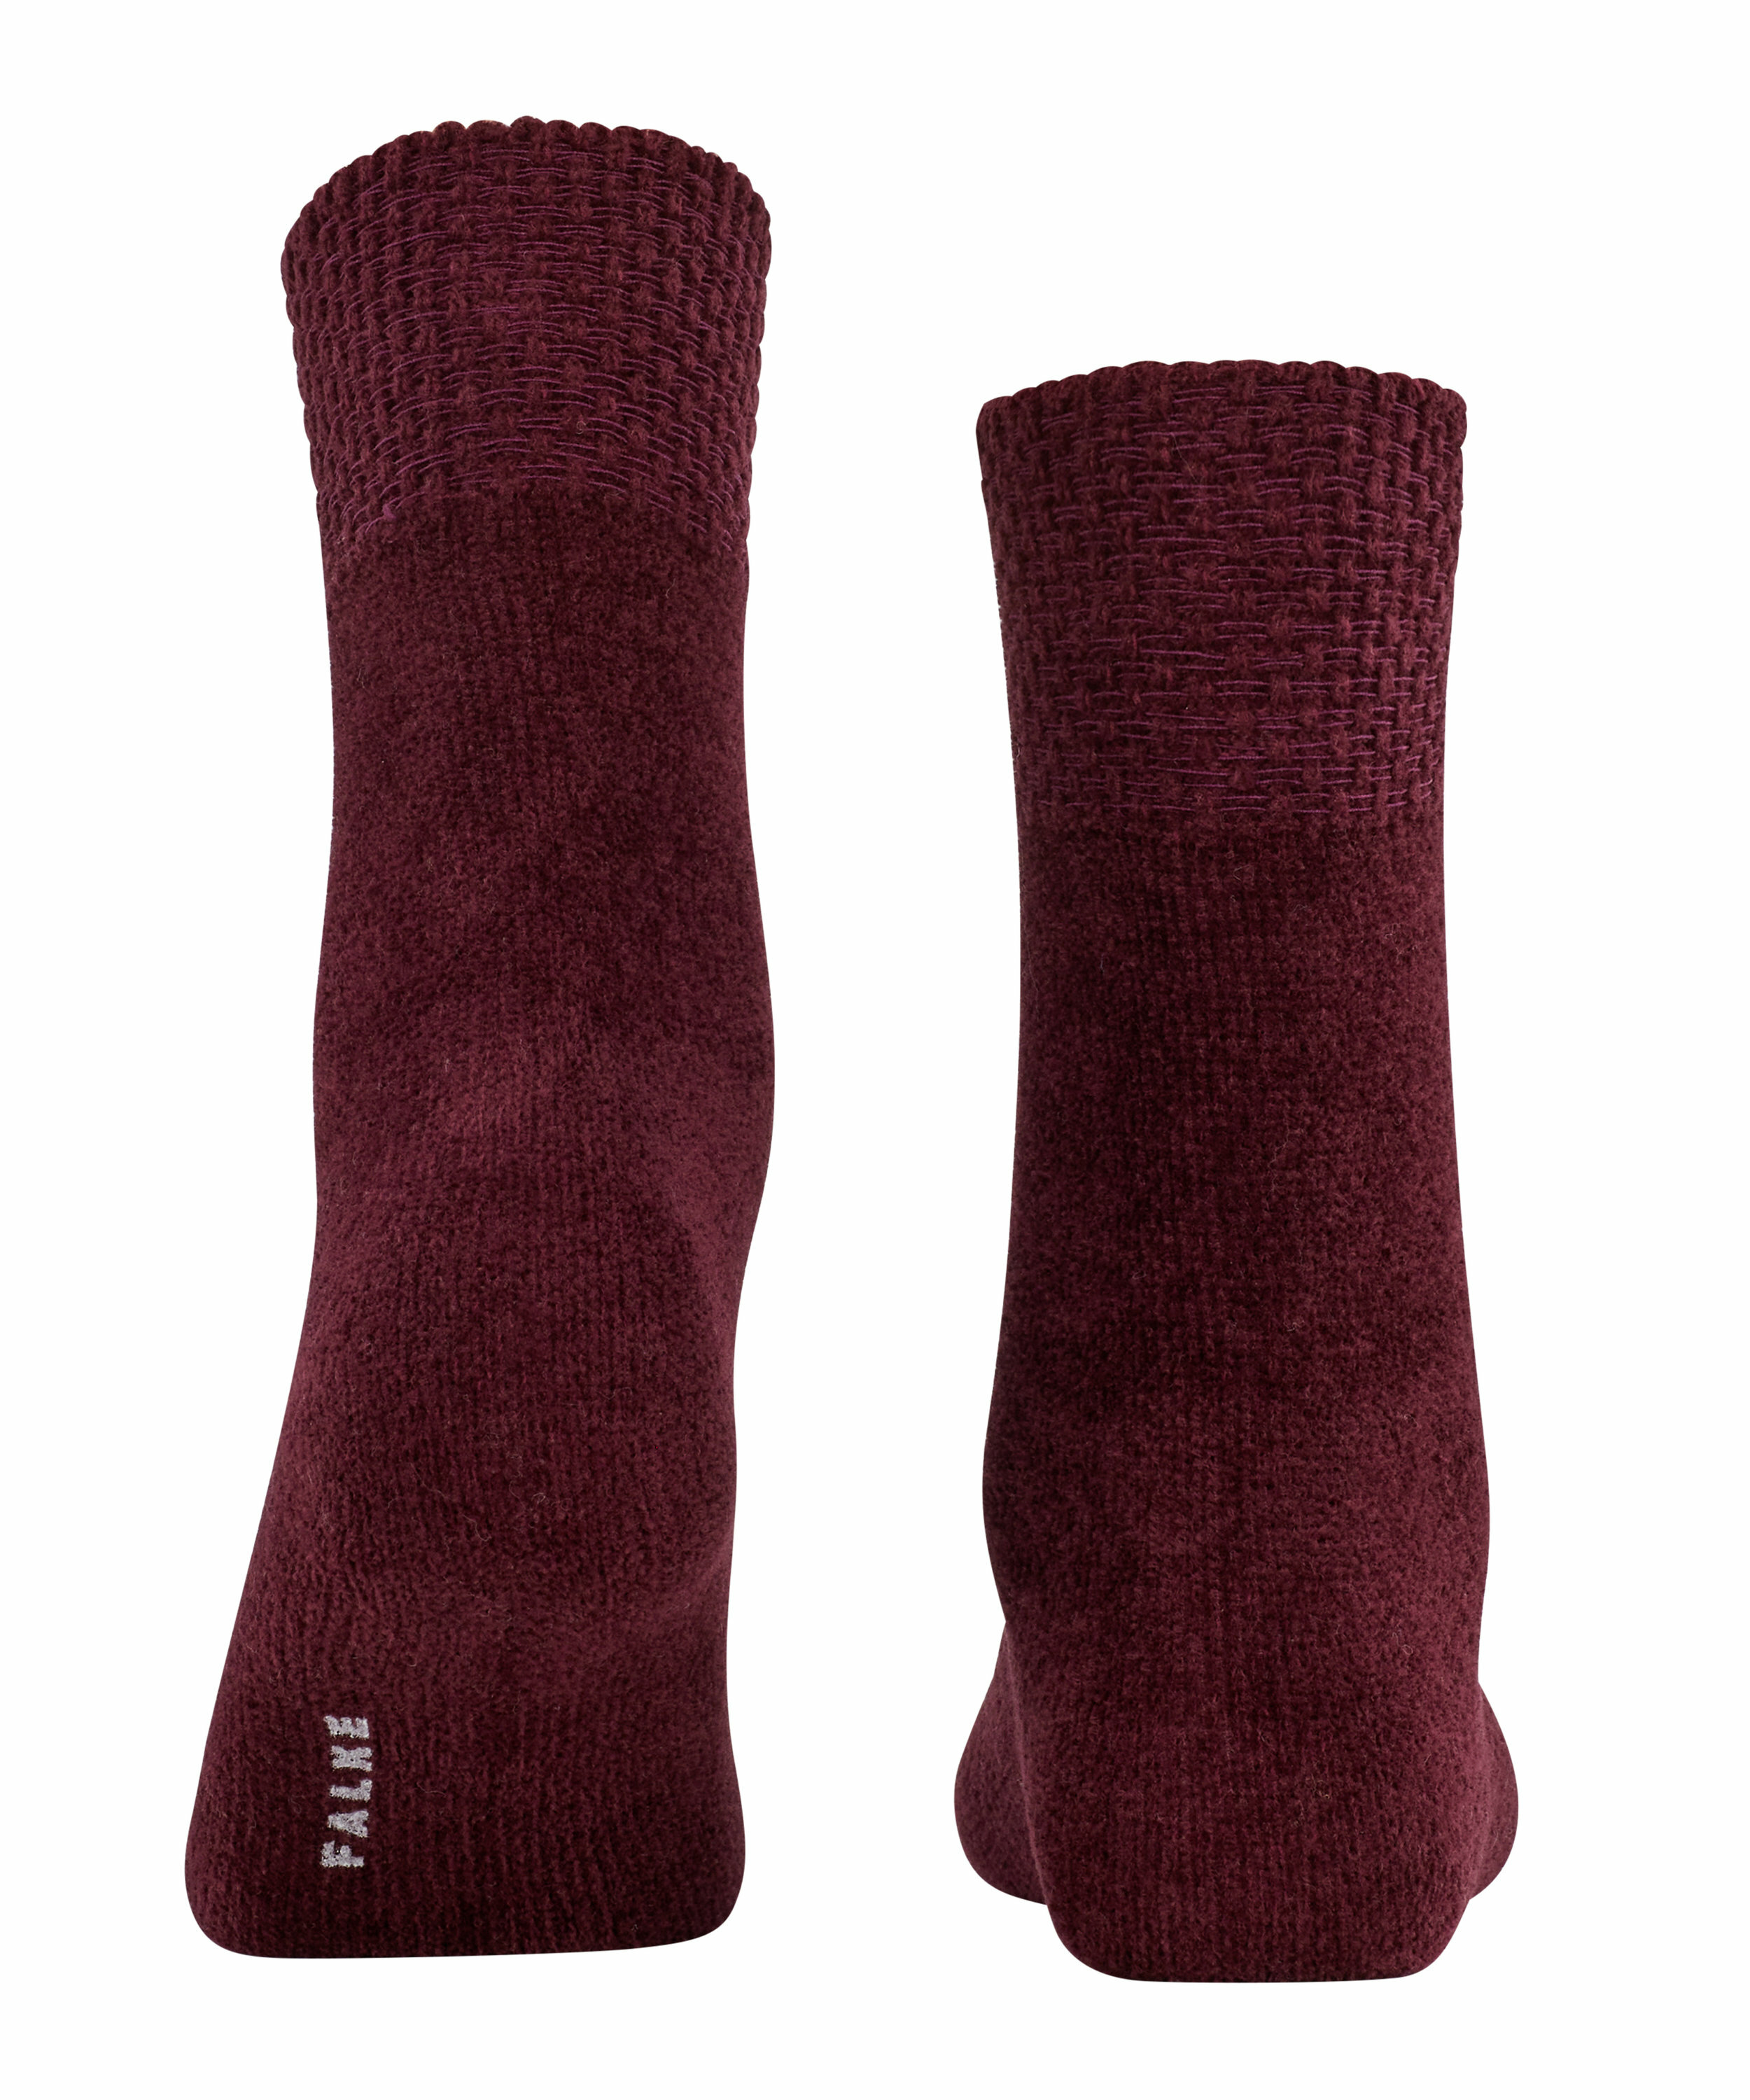 Winter-Socken "Teddy Fur" aus Baumwoll-Mix